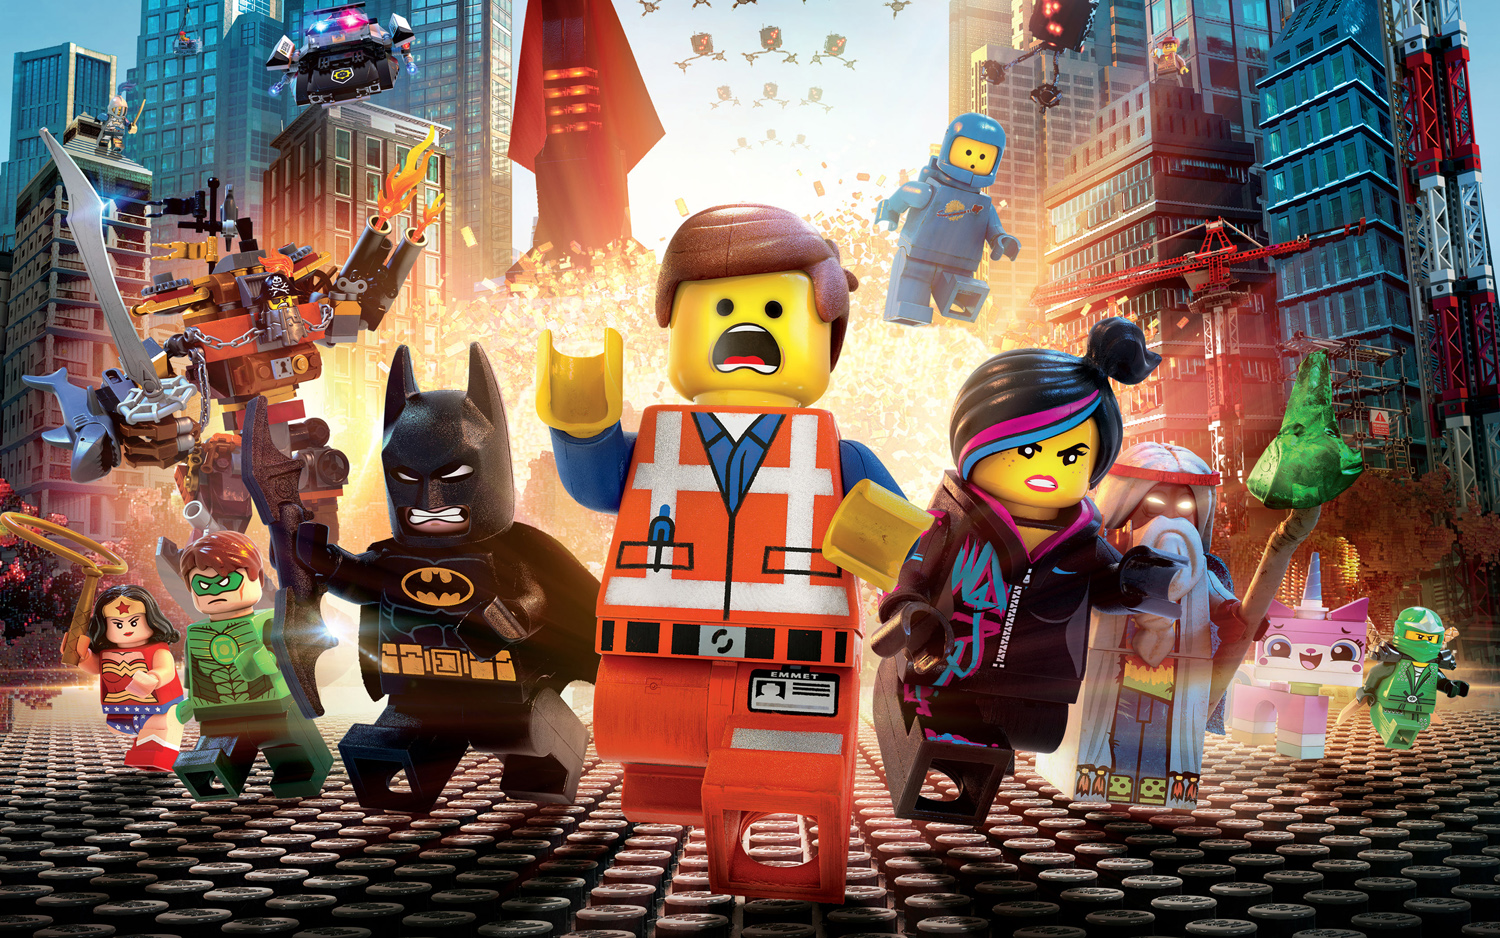 Warner Brothers' <i>The Lego Movie</i> explodes onto screen.